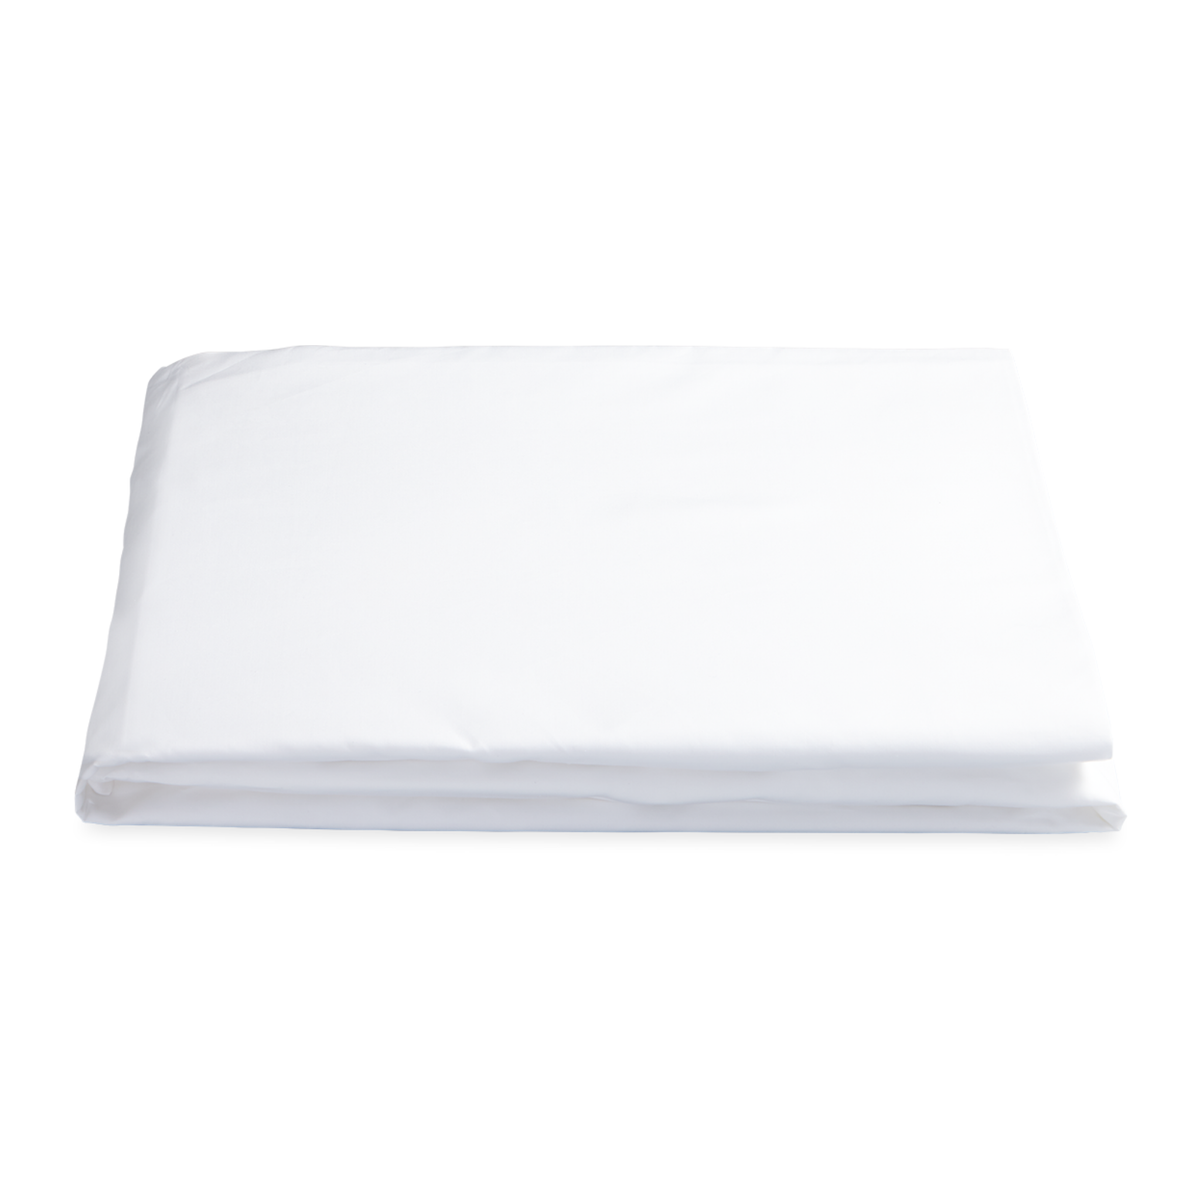 Folded White Fitted Sheet of Matouk Milano Bedding